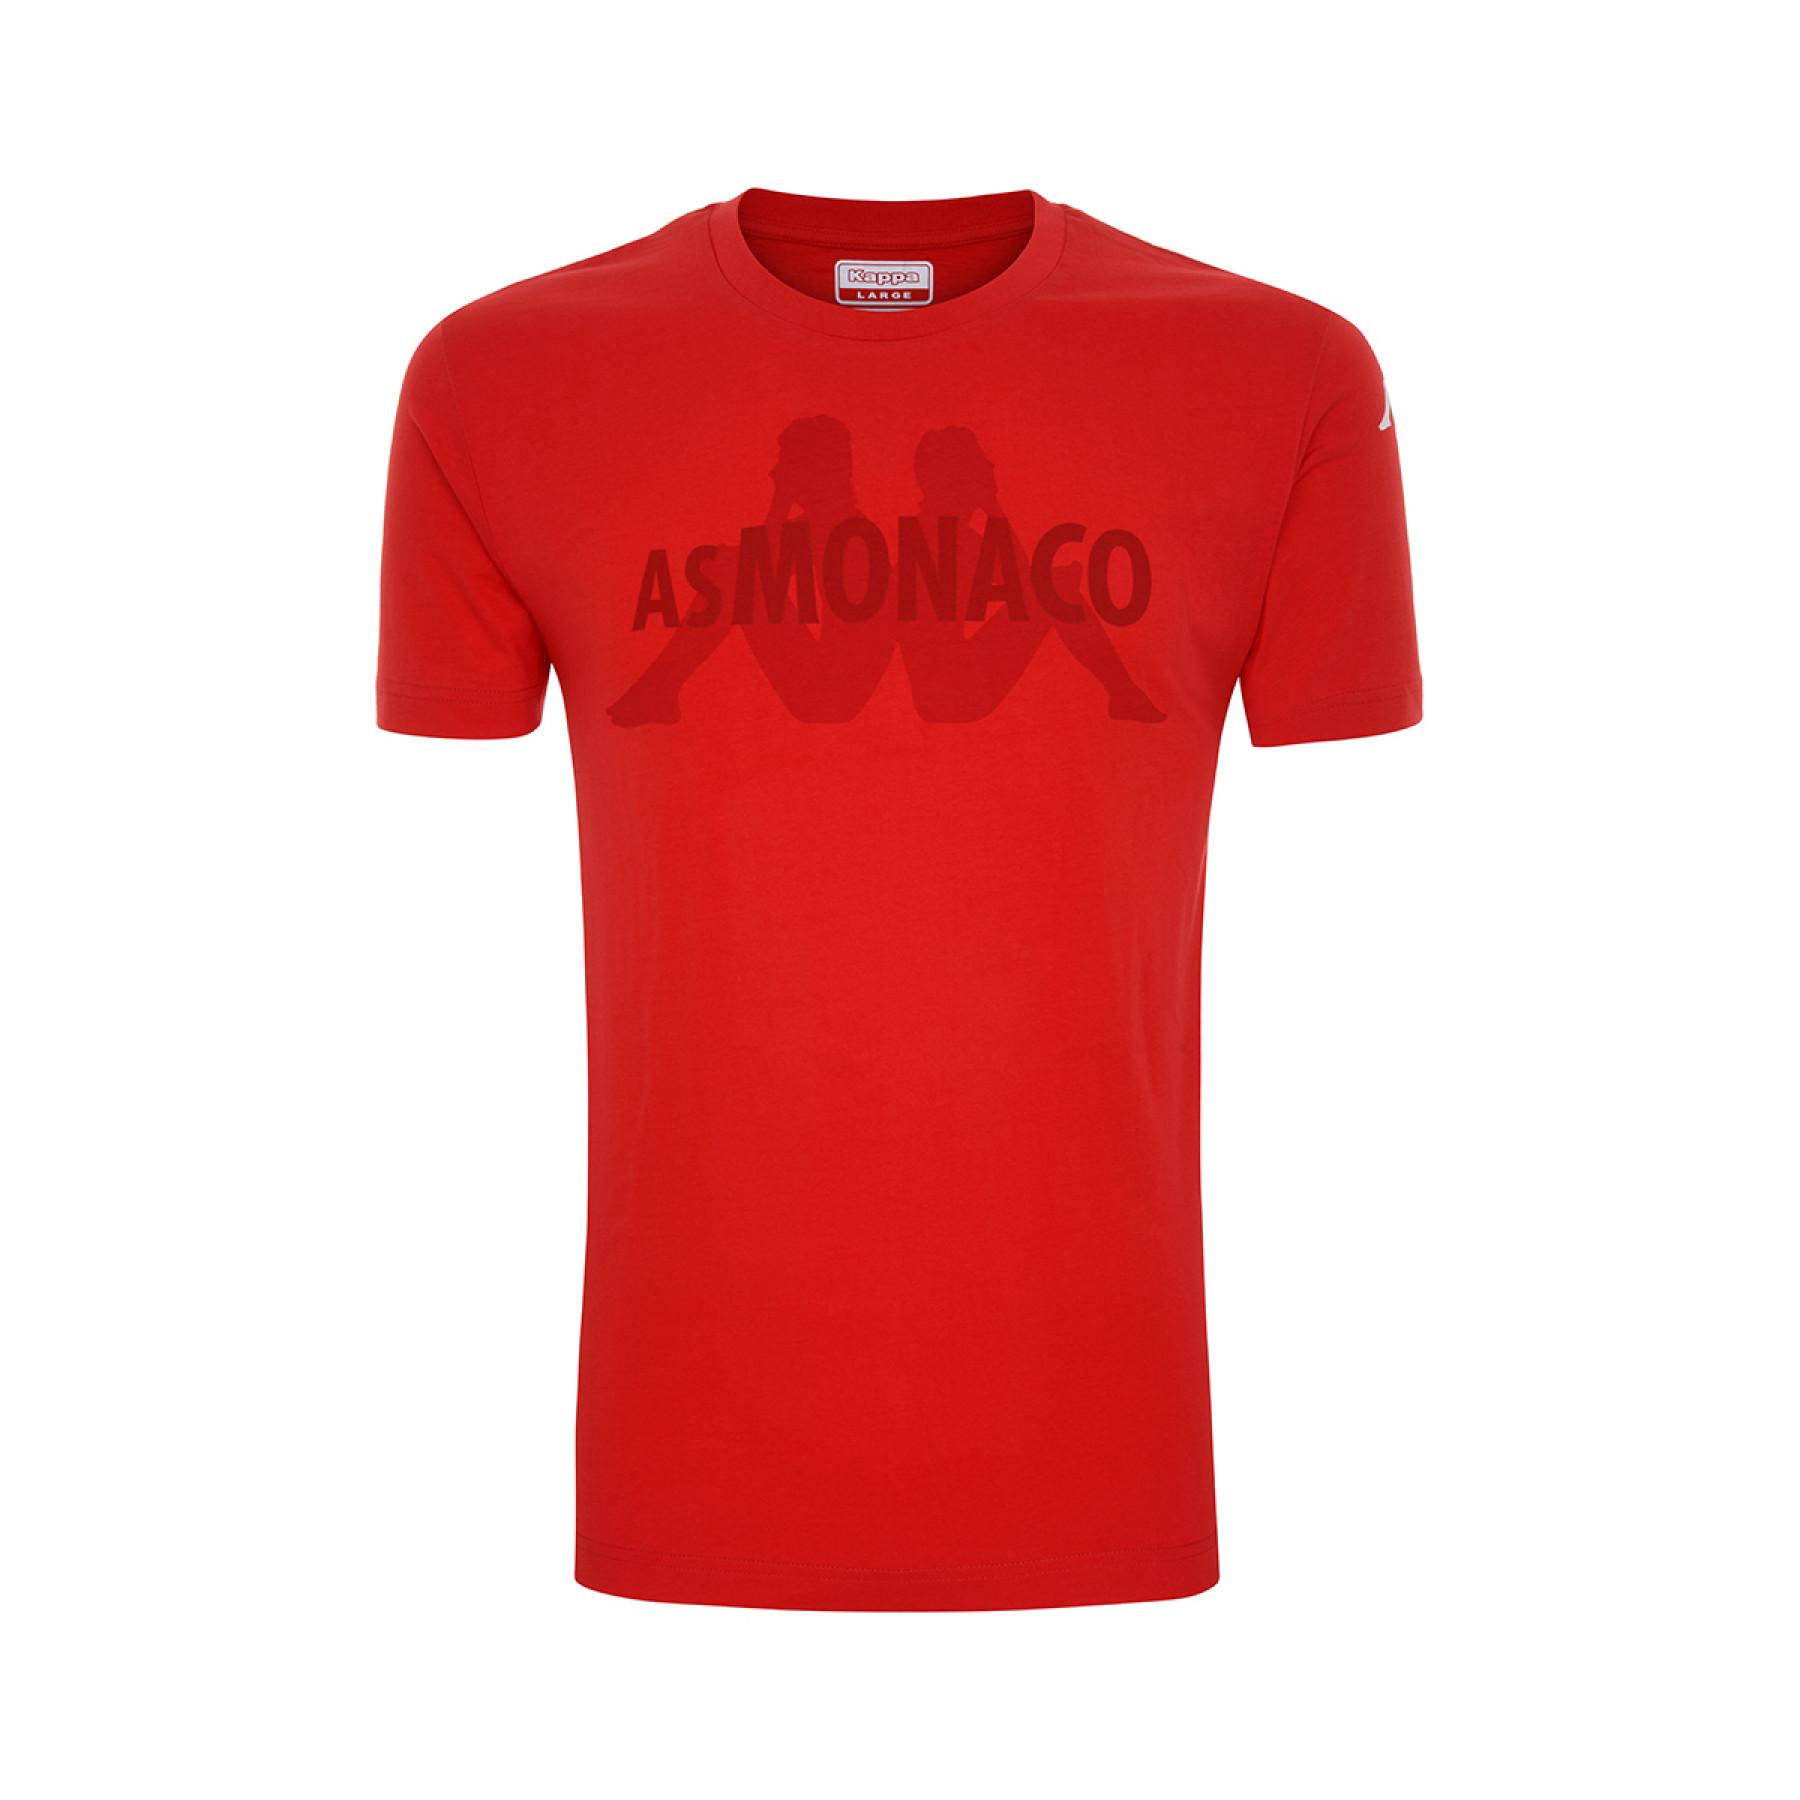 Koszulka AS Monaco 2020/21 avlei